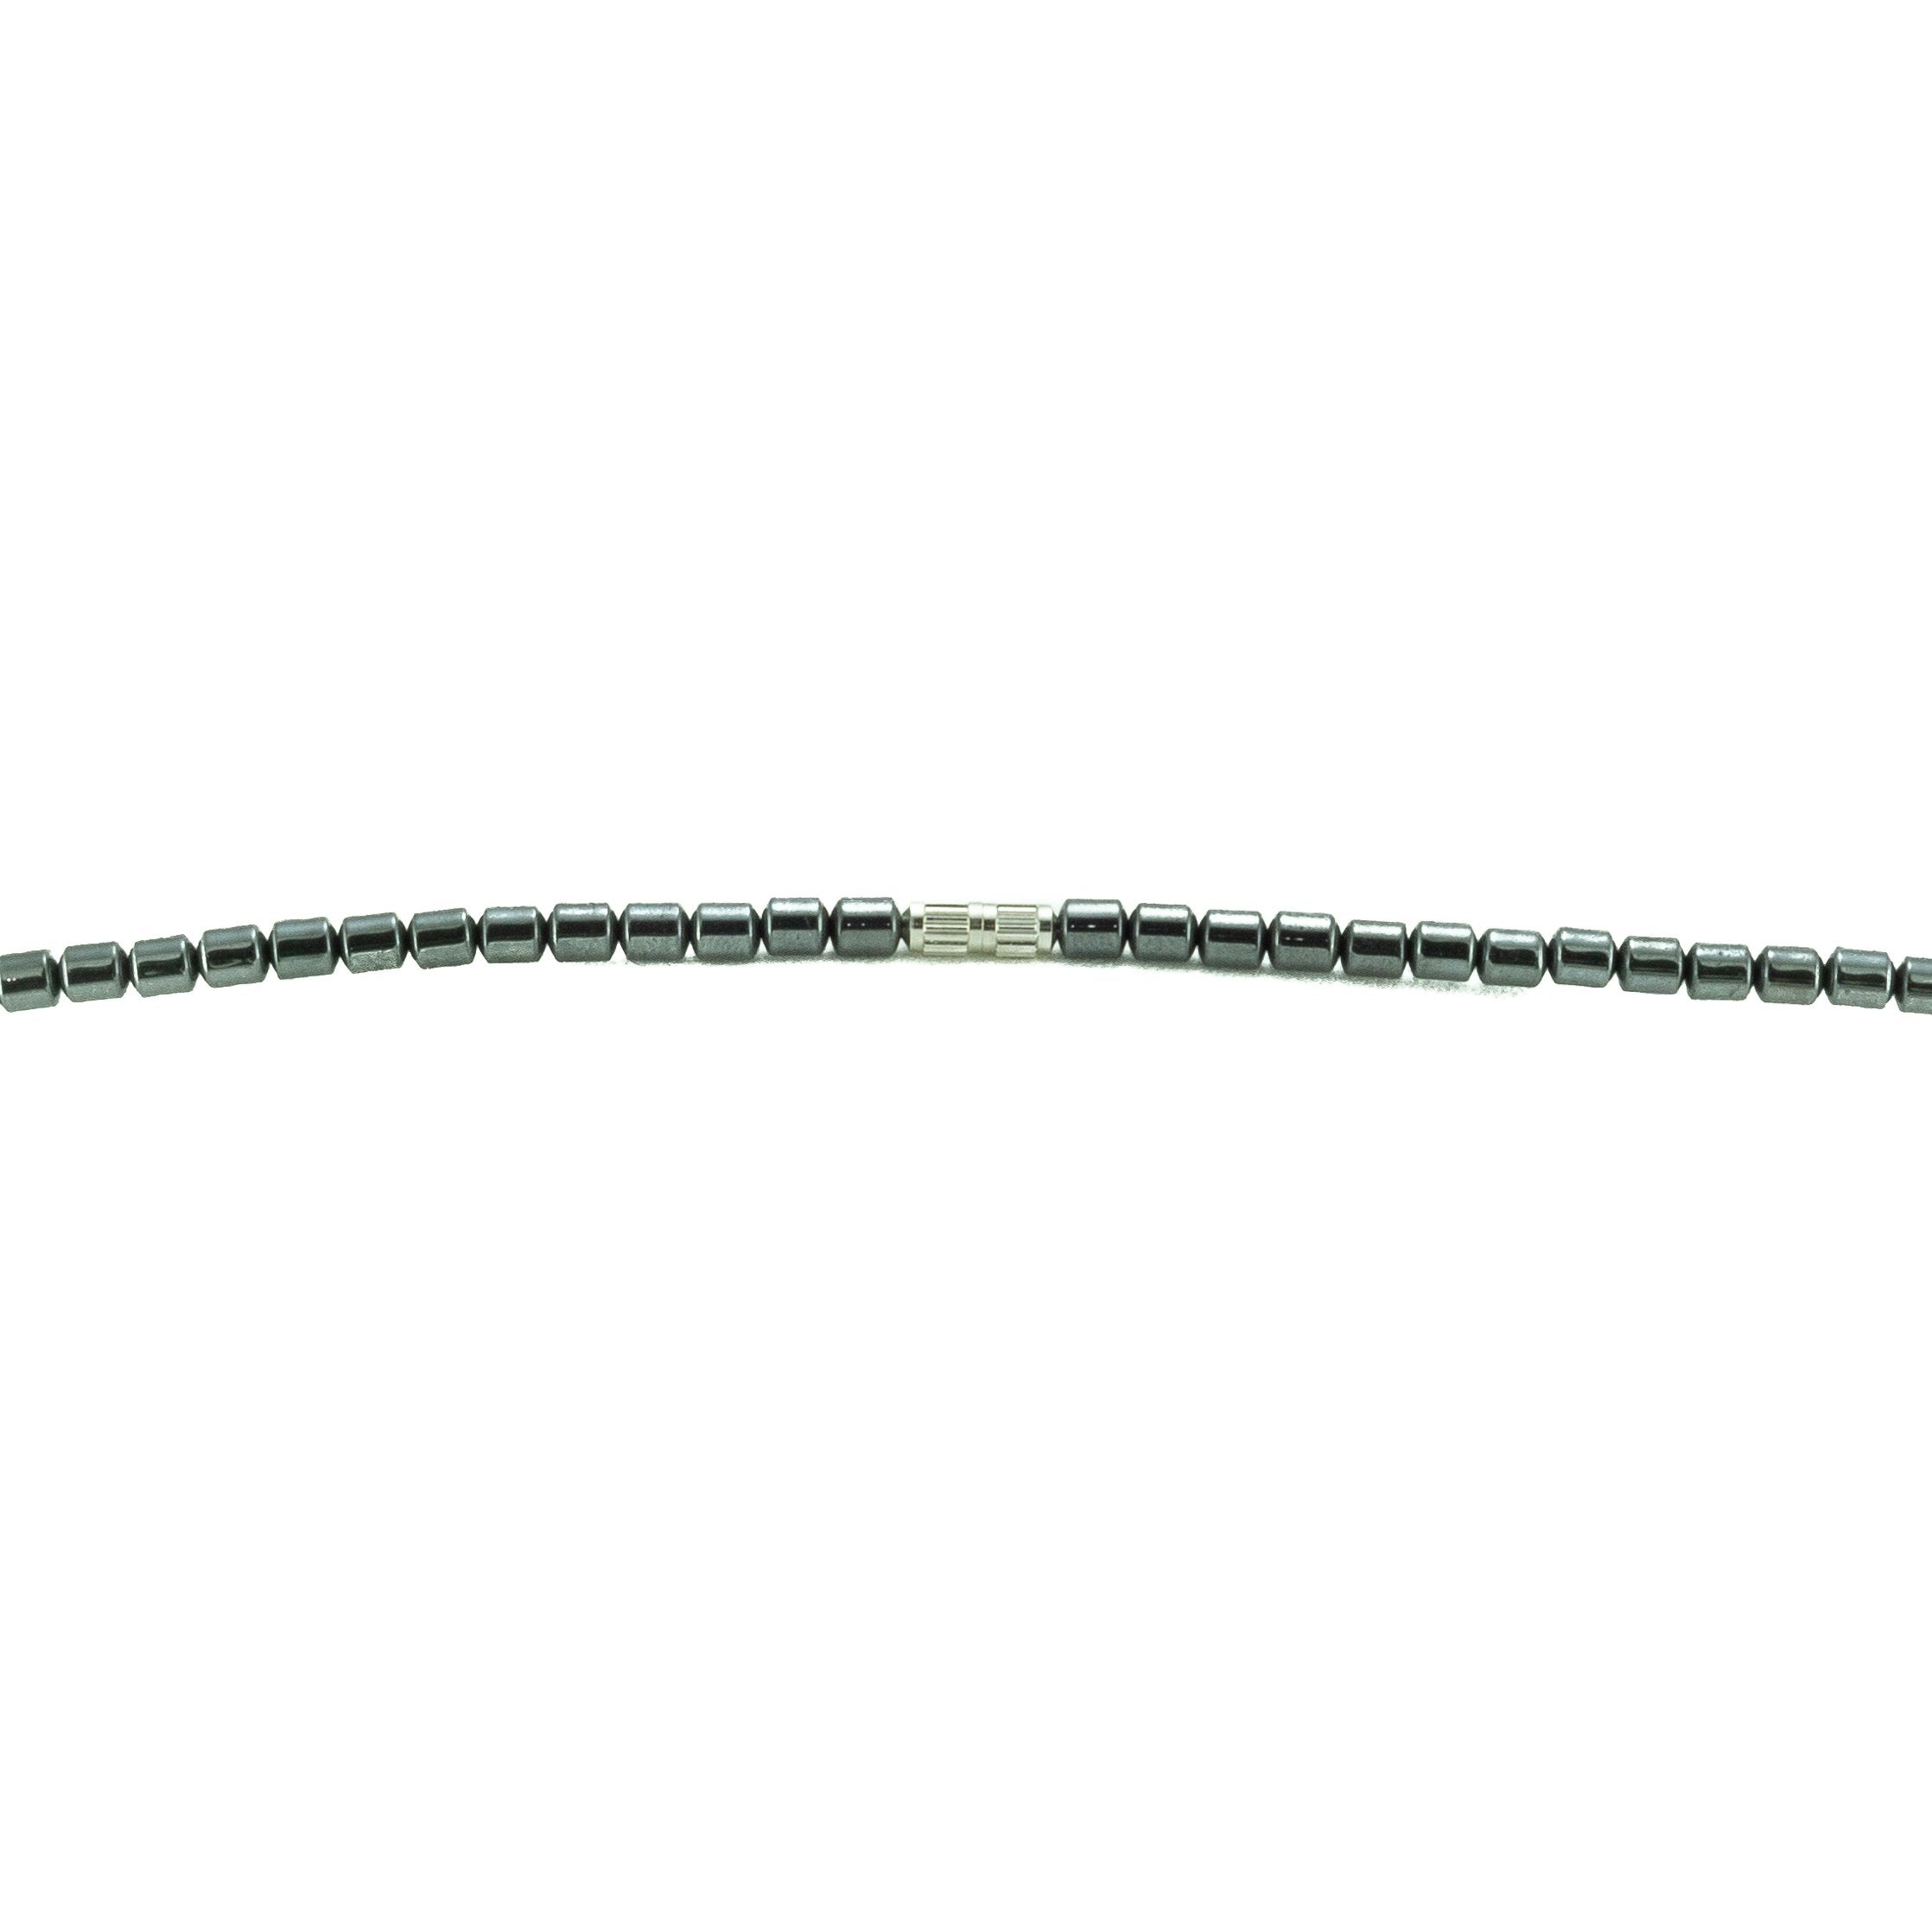 Turquoise Sea Turtle Pendant on Hematite Beads Necklace